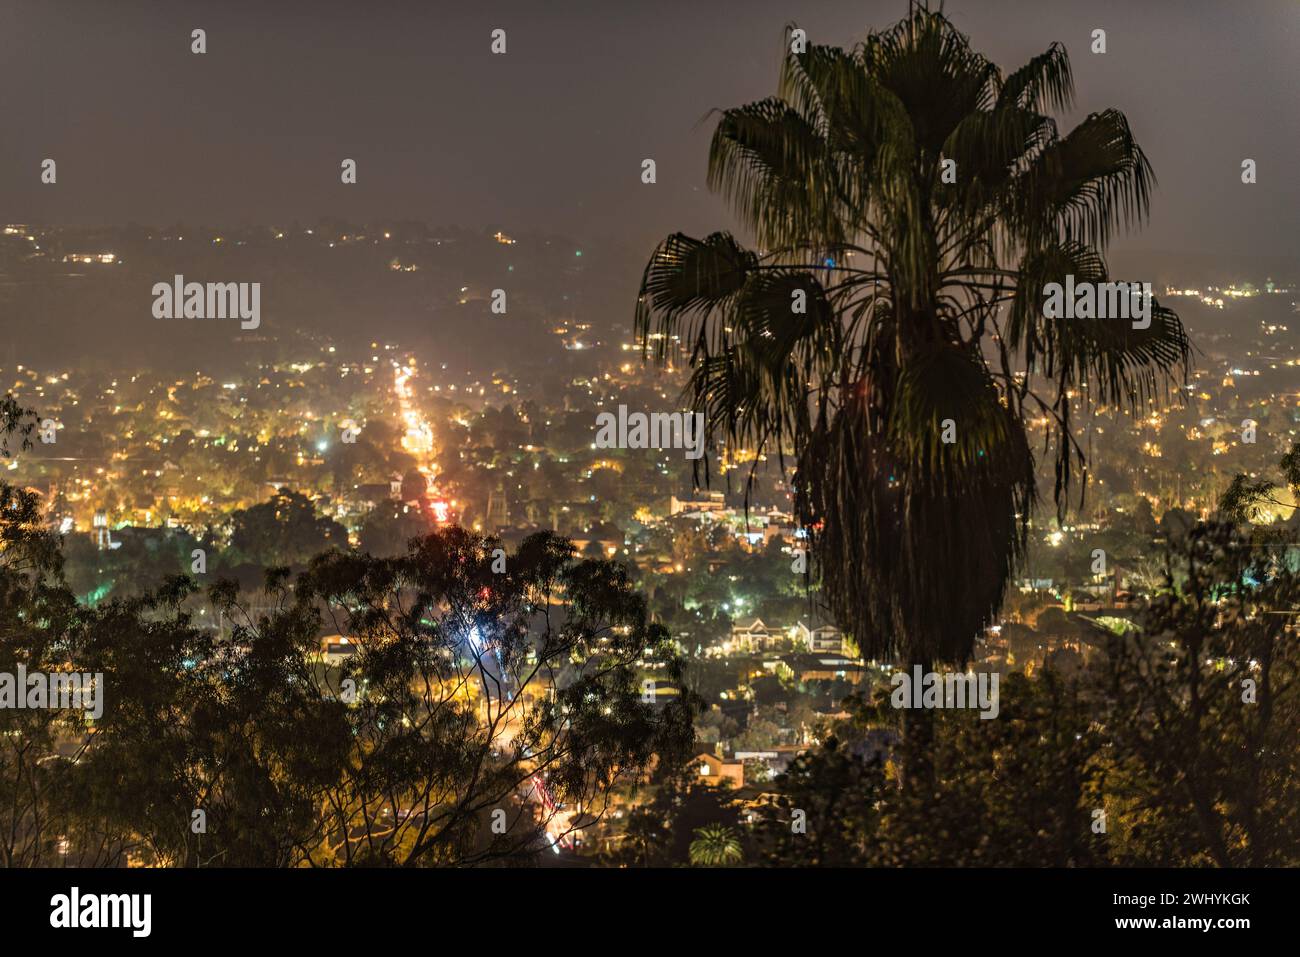 Aerial view, Santa Barbara, Night, City lights, Urban glow, Nighttime panorama, Cityscape, Nocturnal beauty, Urban illumination Stock Photo